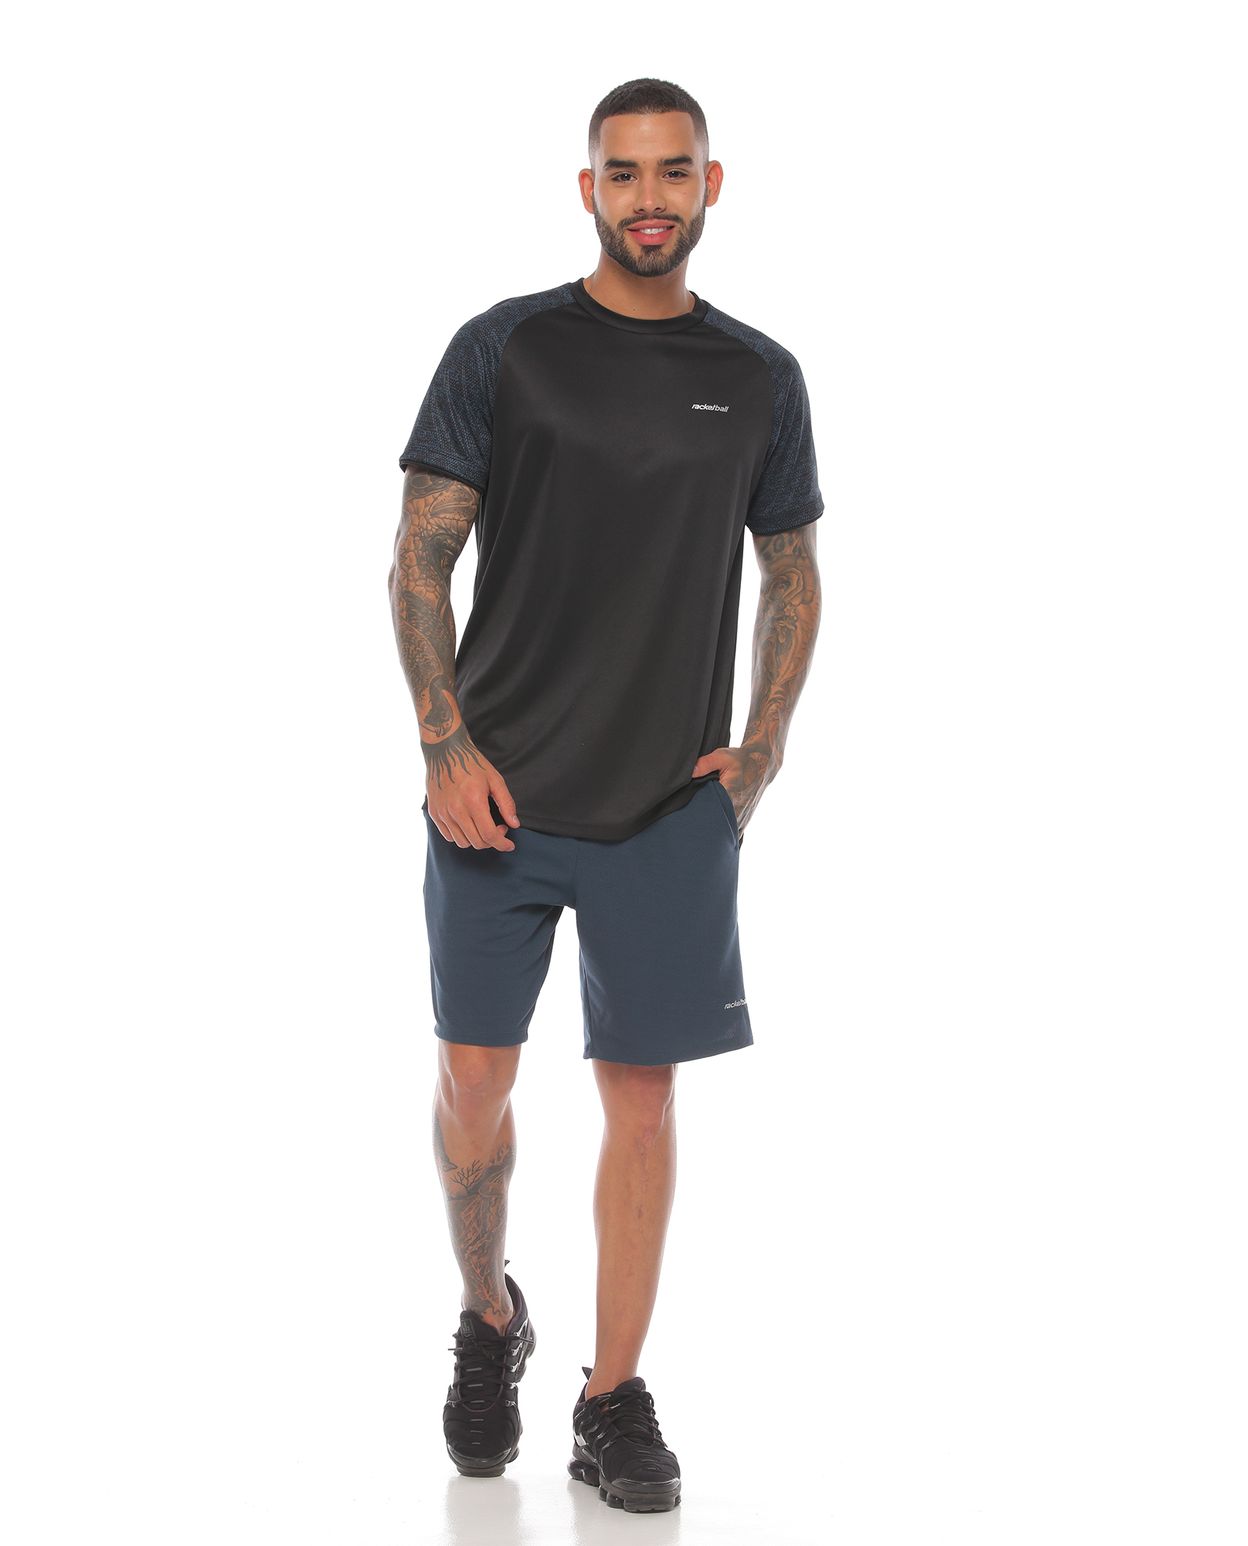 modelo con Camiseta Deportiva Negra y pantaloneta deportiva para Hombre